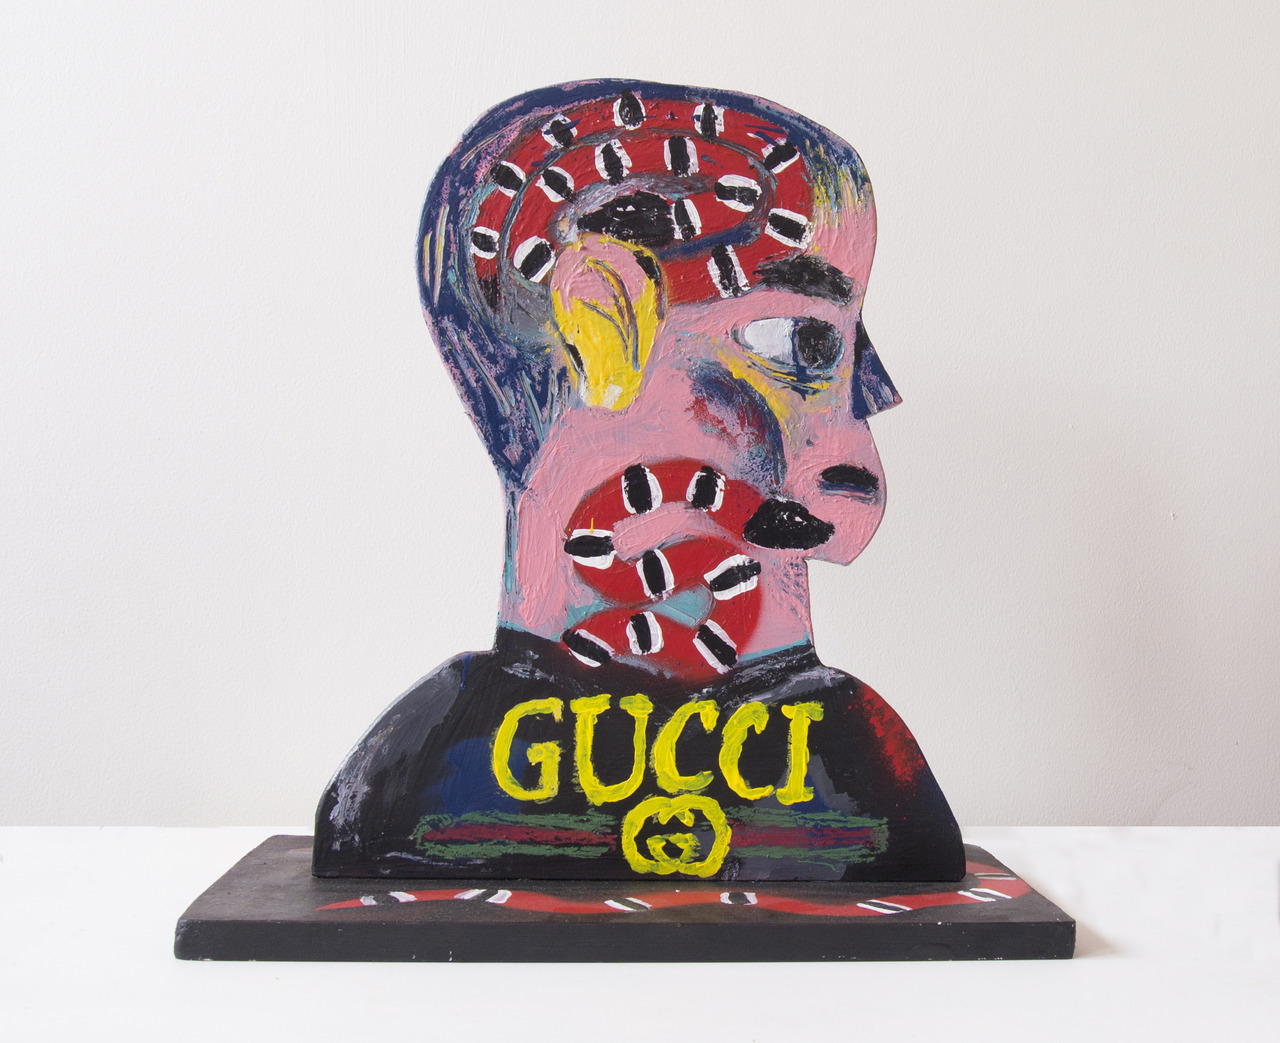 “Gucci snakes on my head” wood sculpture @ohbrunolisboa on instagram _____________________________________________ Follow EatSleepDraw on Instagram for more inspiration!